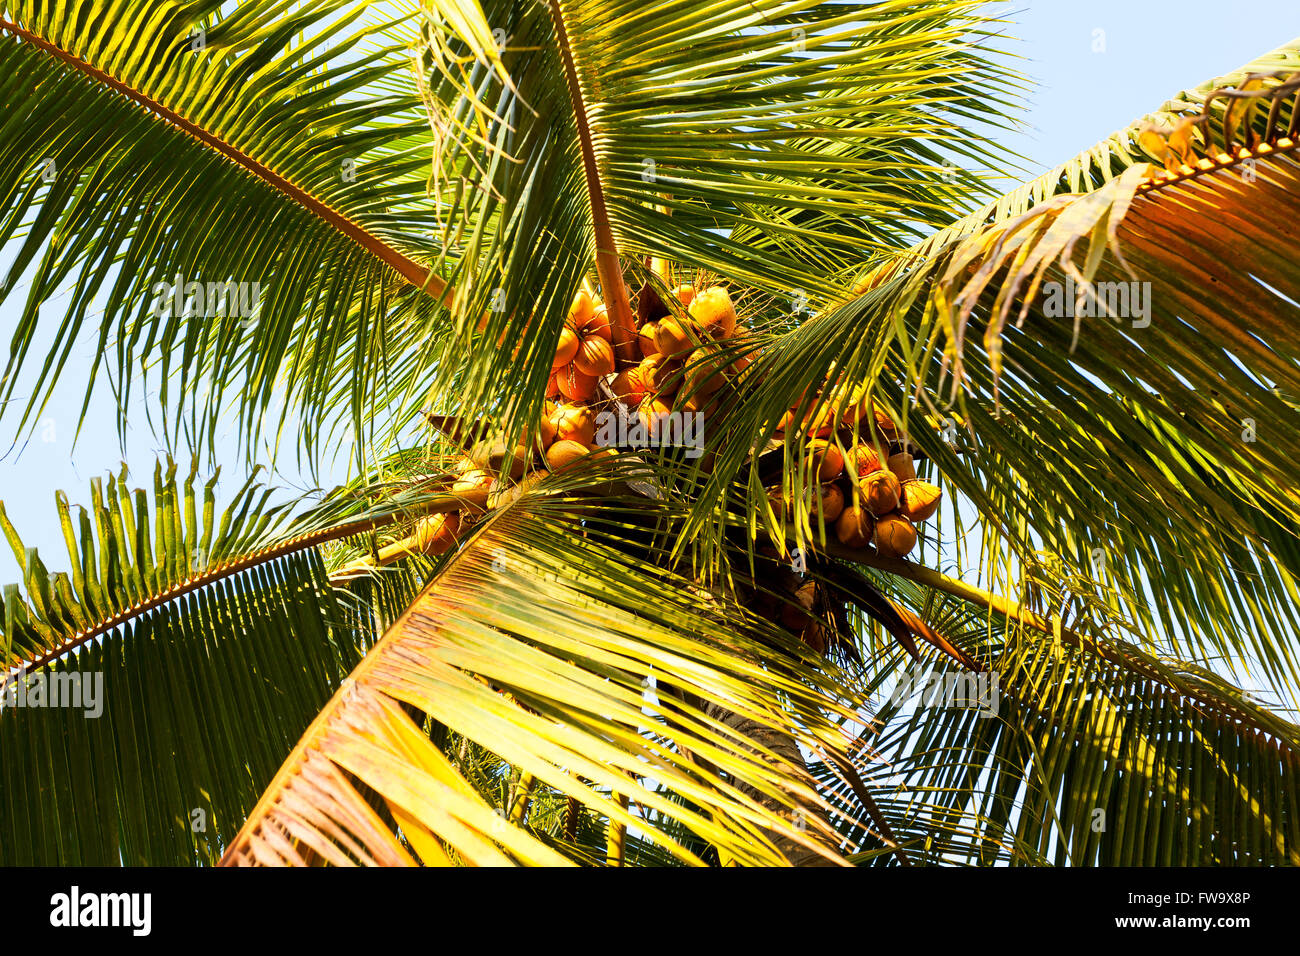 Coconut Palm Tree closeup Stockfotografie - Alamy